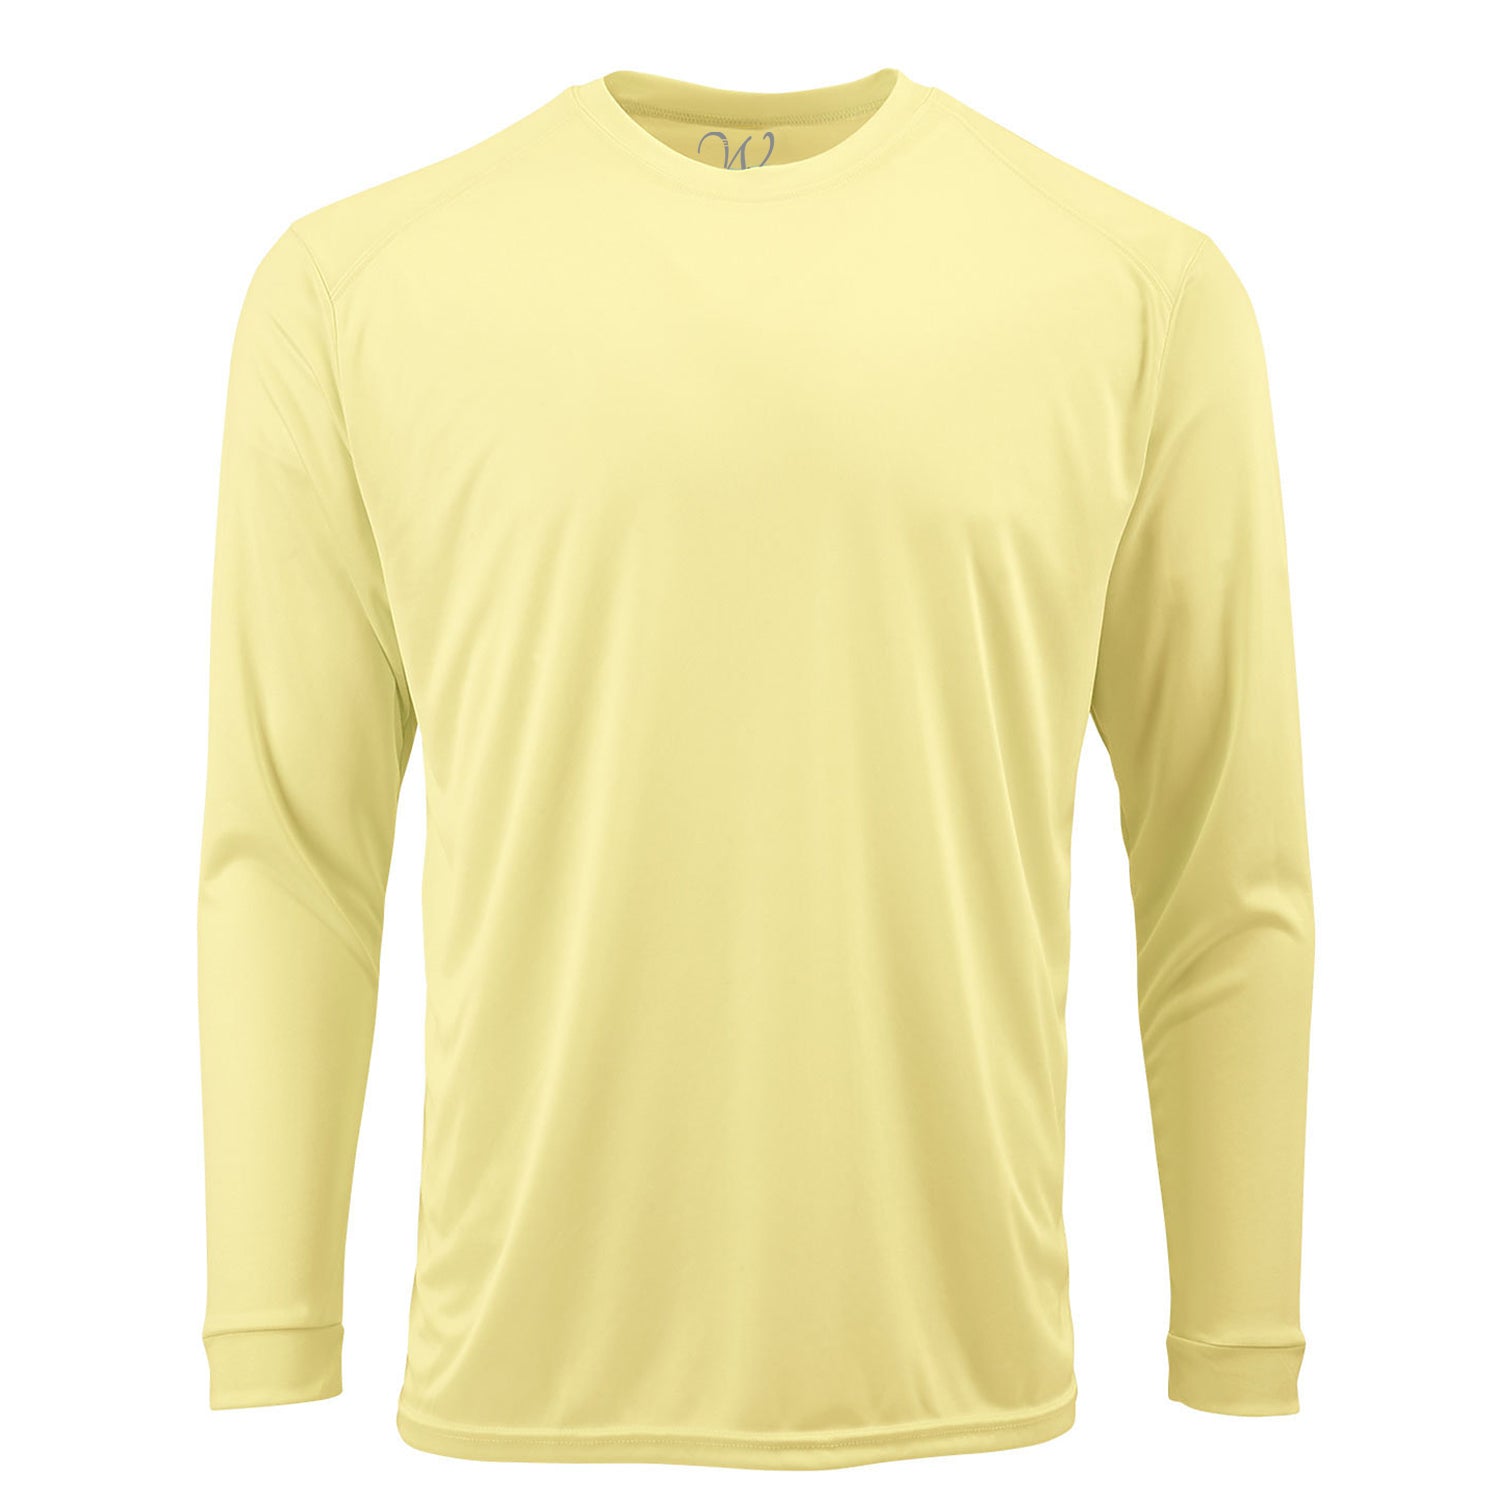 EWC-210LY Perform Basics Dri-Tech Long Sleeve Shirt - Light Yellow ...